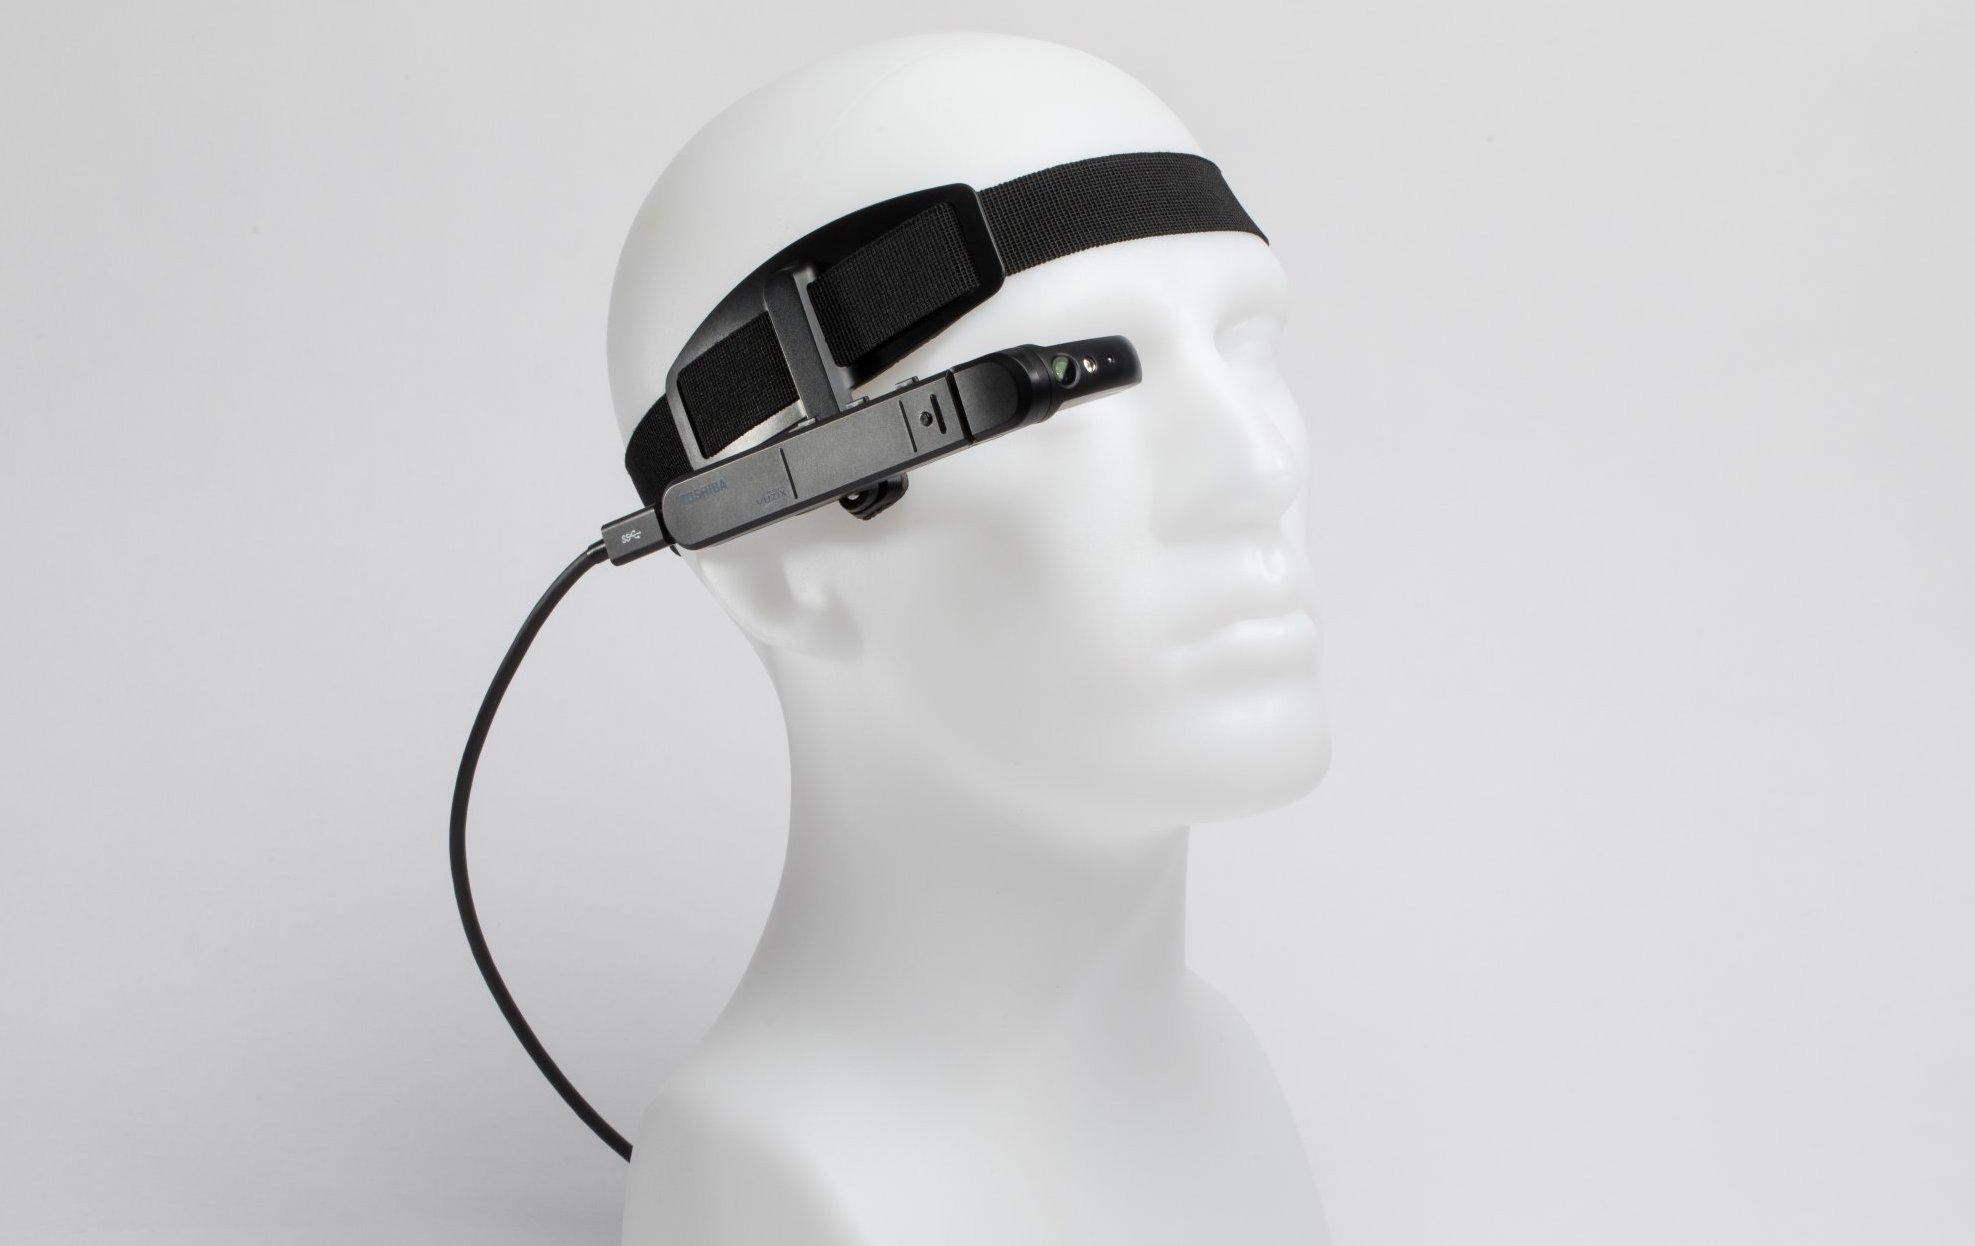 toshibadynaedgear smartglassesheadband side view